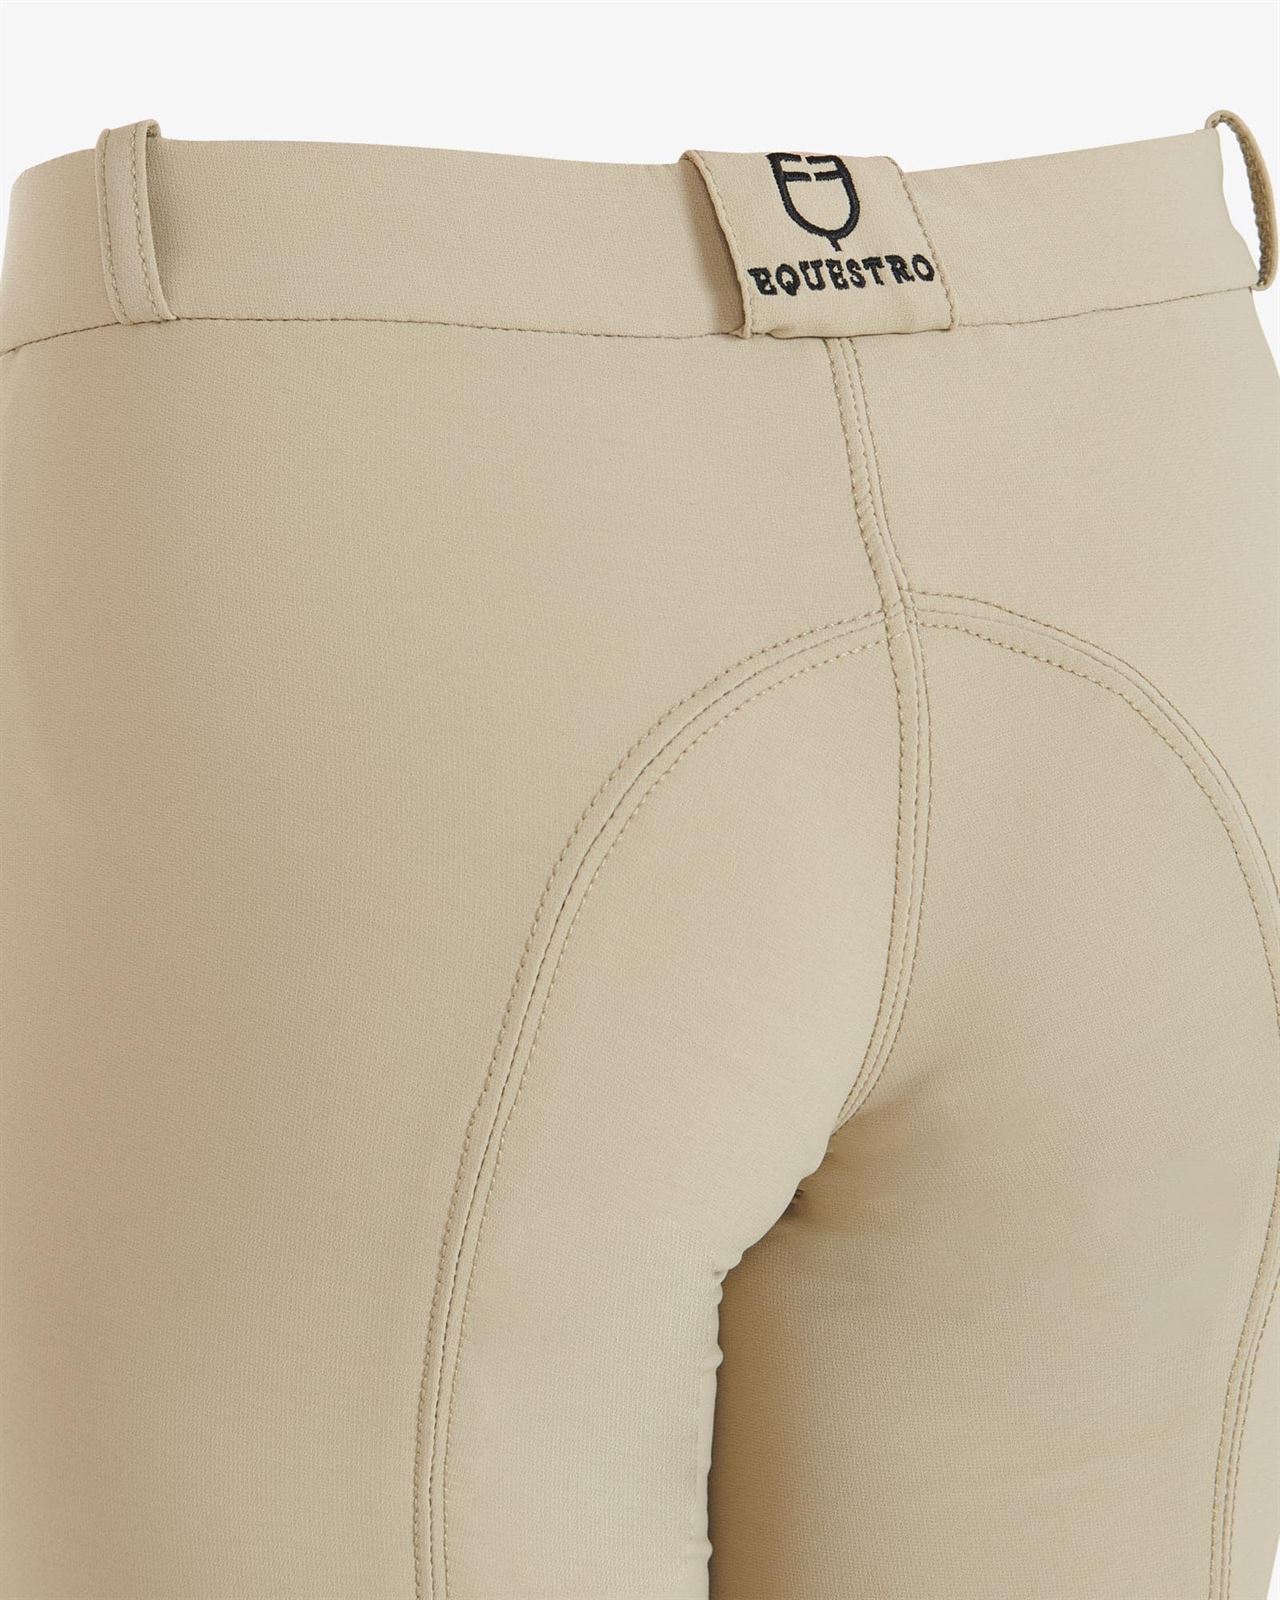 Pantalón unisex EQUESTRO color beige, grip rodilla, tallaje infantil - Imagen 5